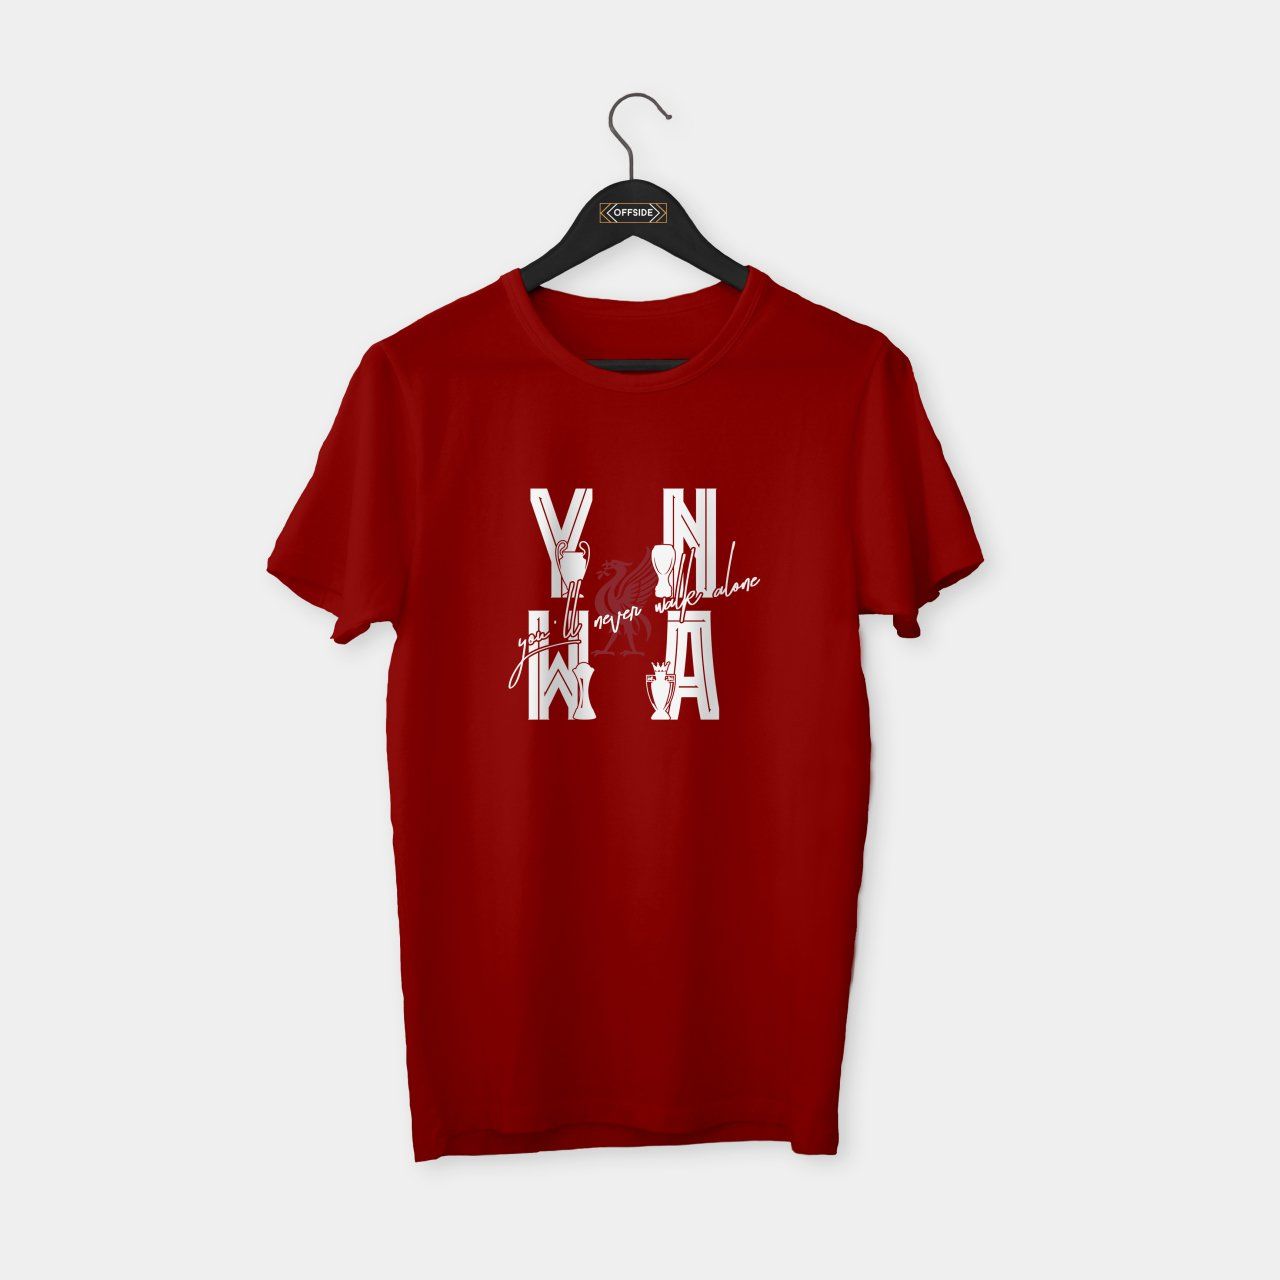 YNWA  - Liverpool - You'll Never Walk Alone T-shirt